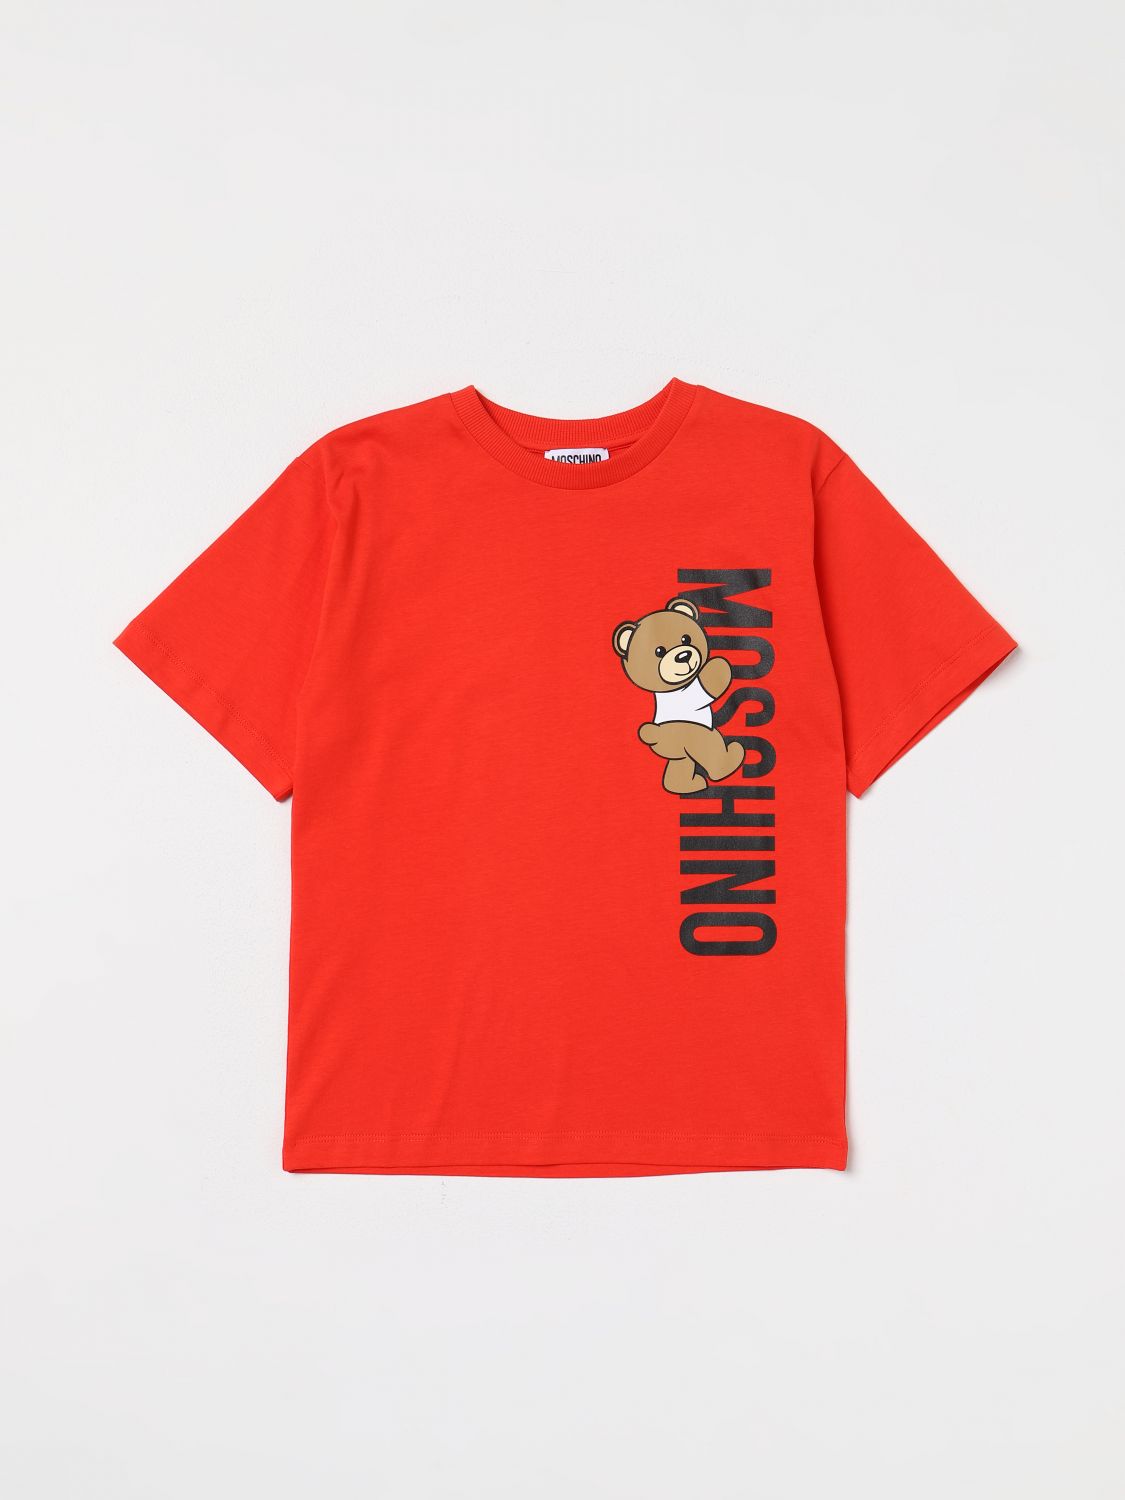 Moschino Kid T-shirt  Kids Colour Red